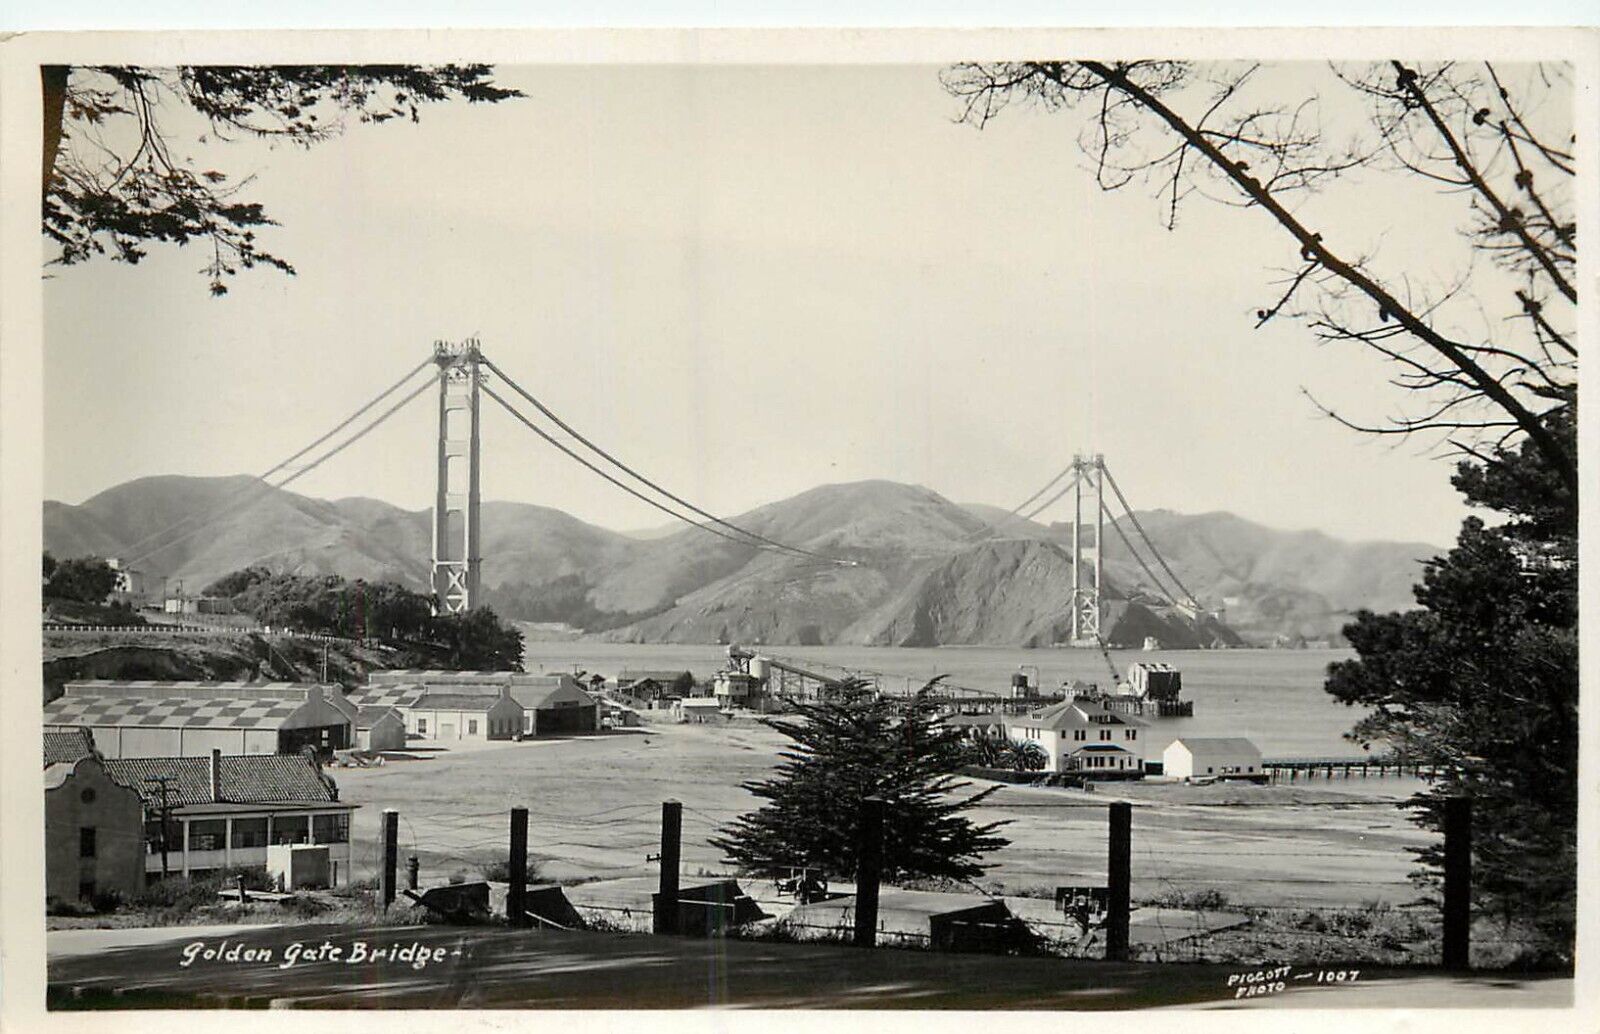 RPPC Postcard Golden Gate Bridge Construction No Roadbed Yet Piggott Photo 1007